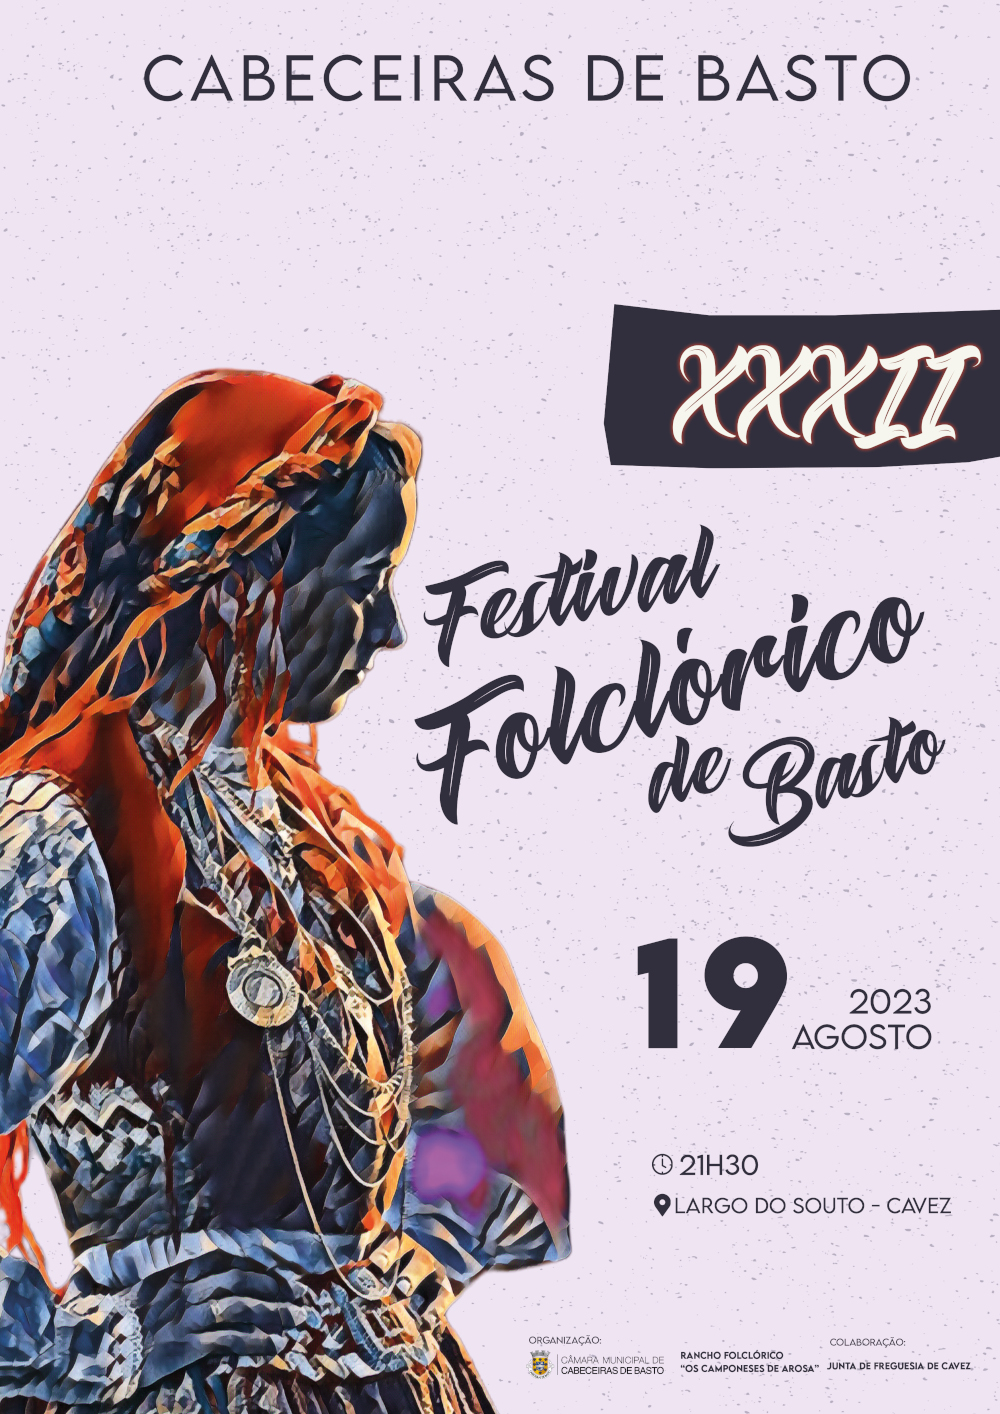 XXXII Festival Folclórico de Basto